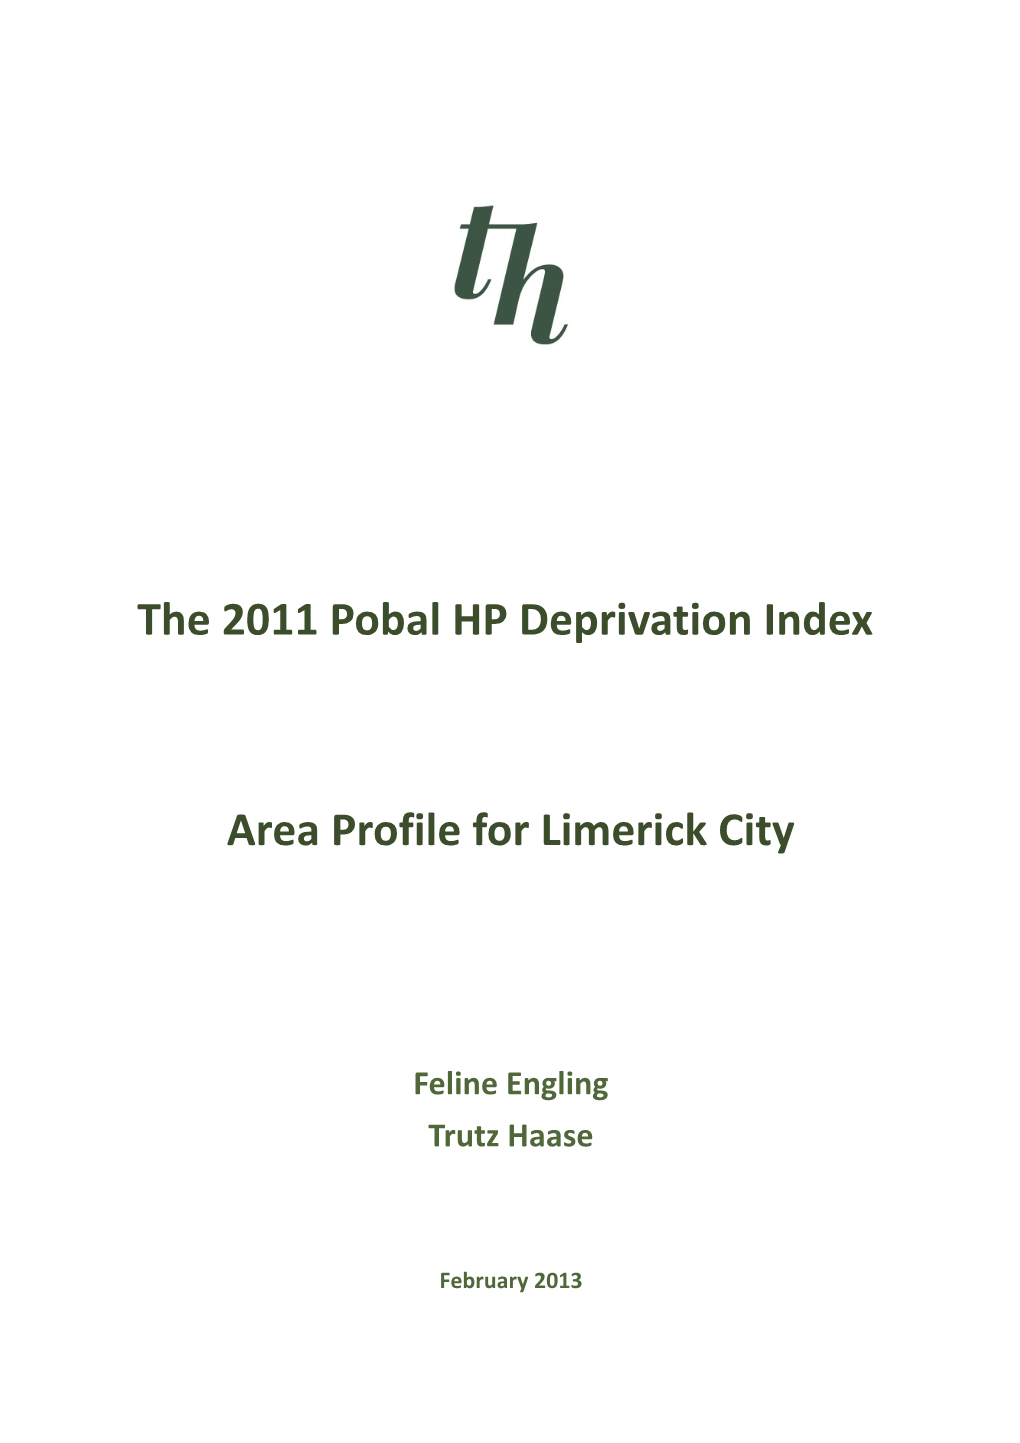 Area Profile for Limerick City